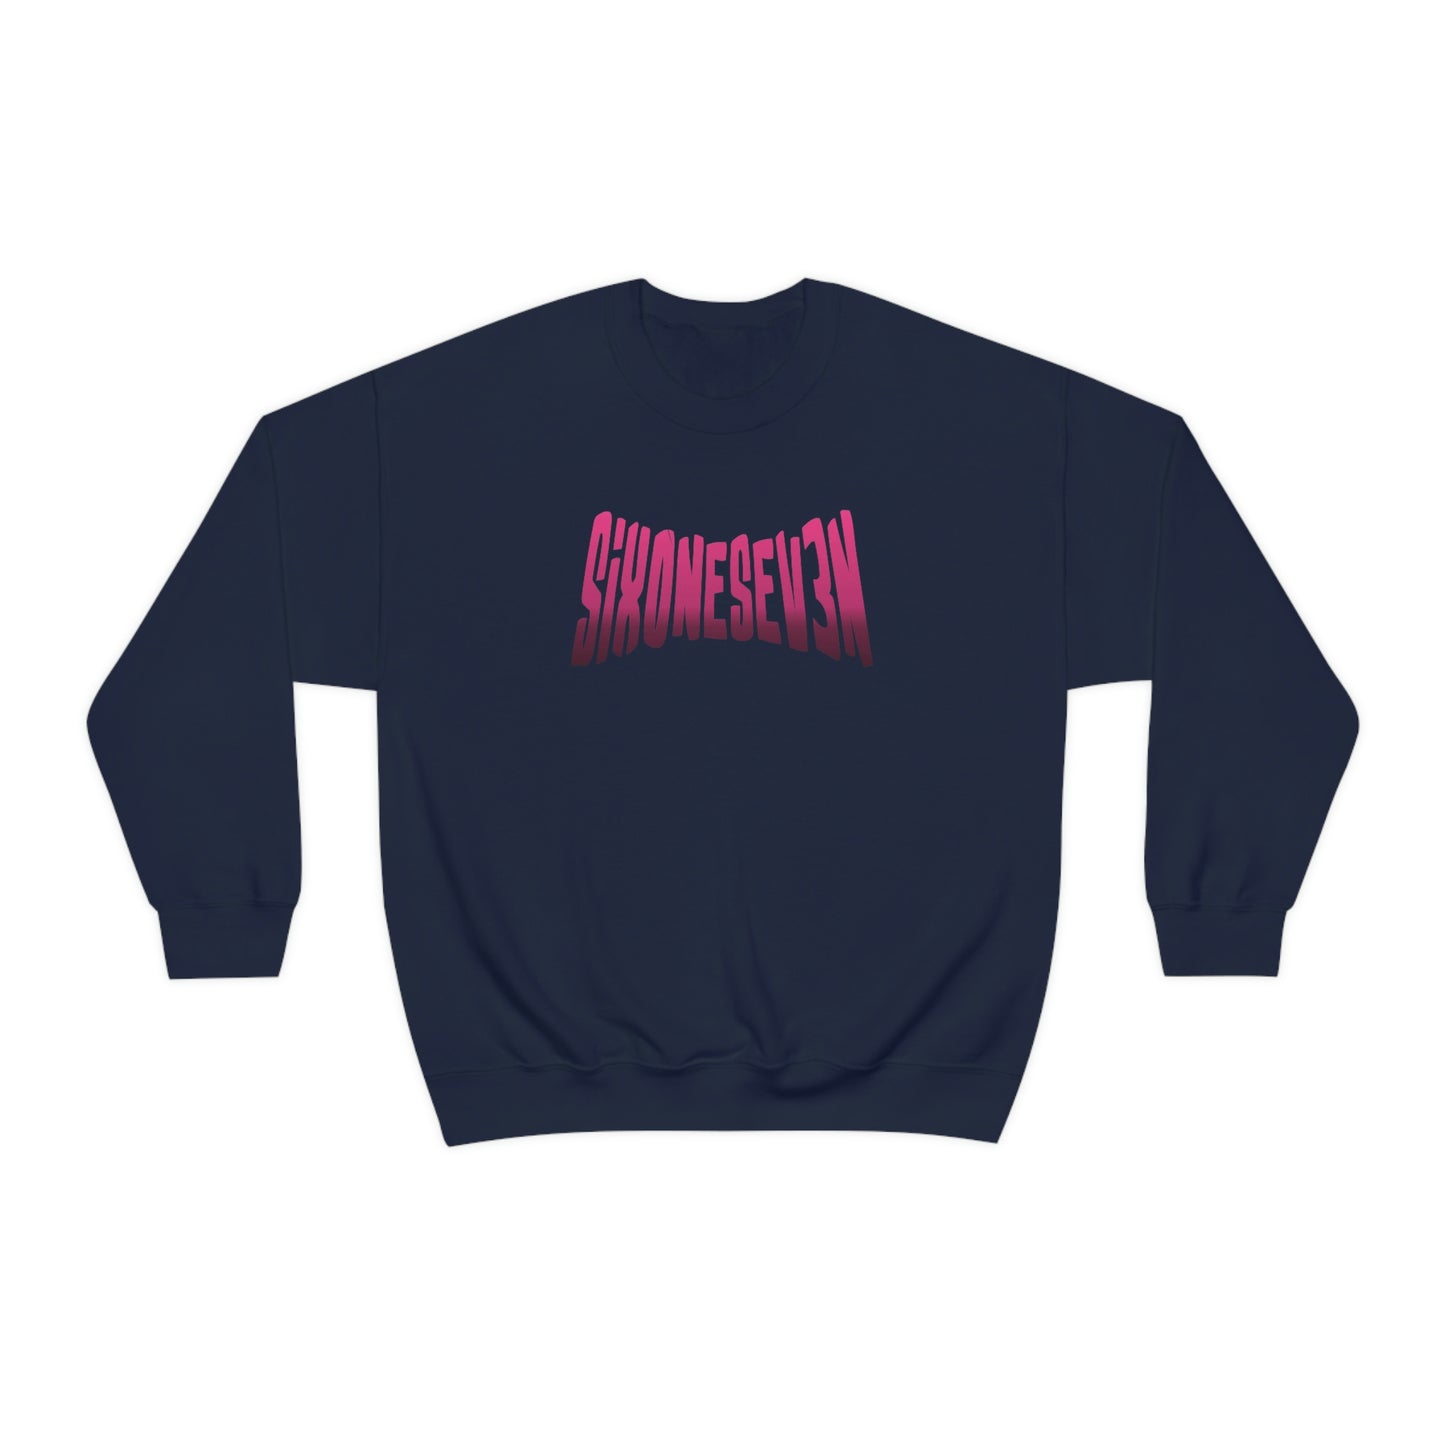 SixOneSev3n Text Unisex Sweatshirt